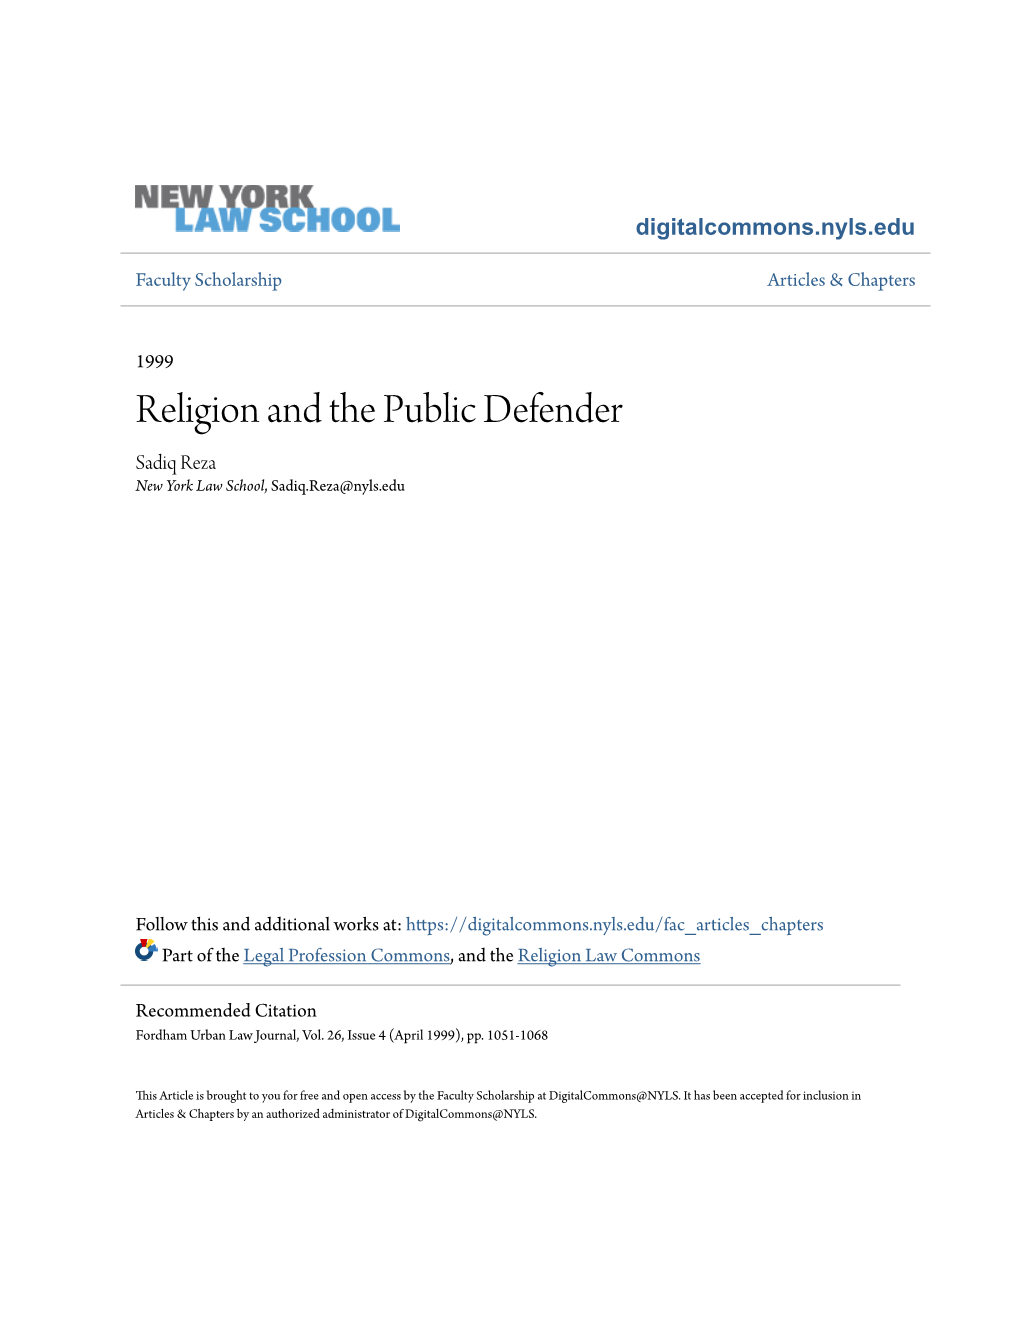 Religion and the Public Defender Sadiq Reza New York Law School, Sadiq.Reza@Nyls.Edu